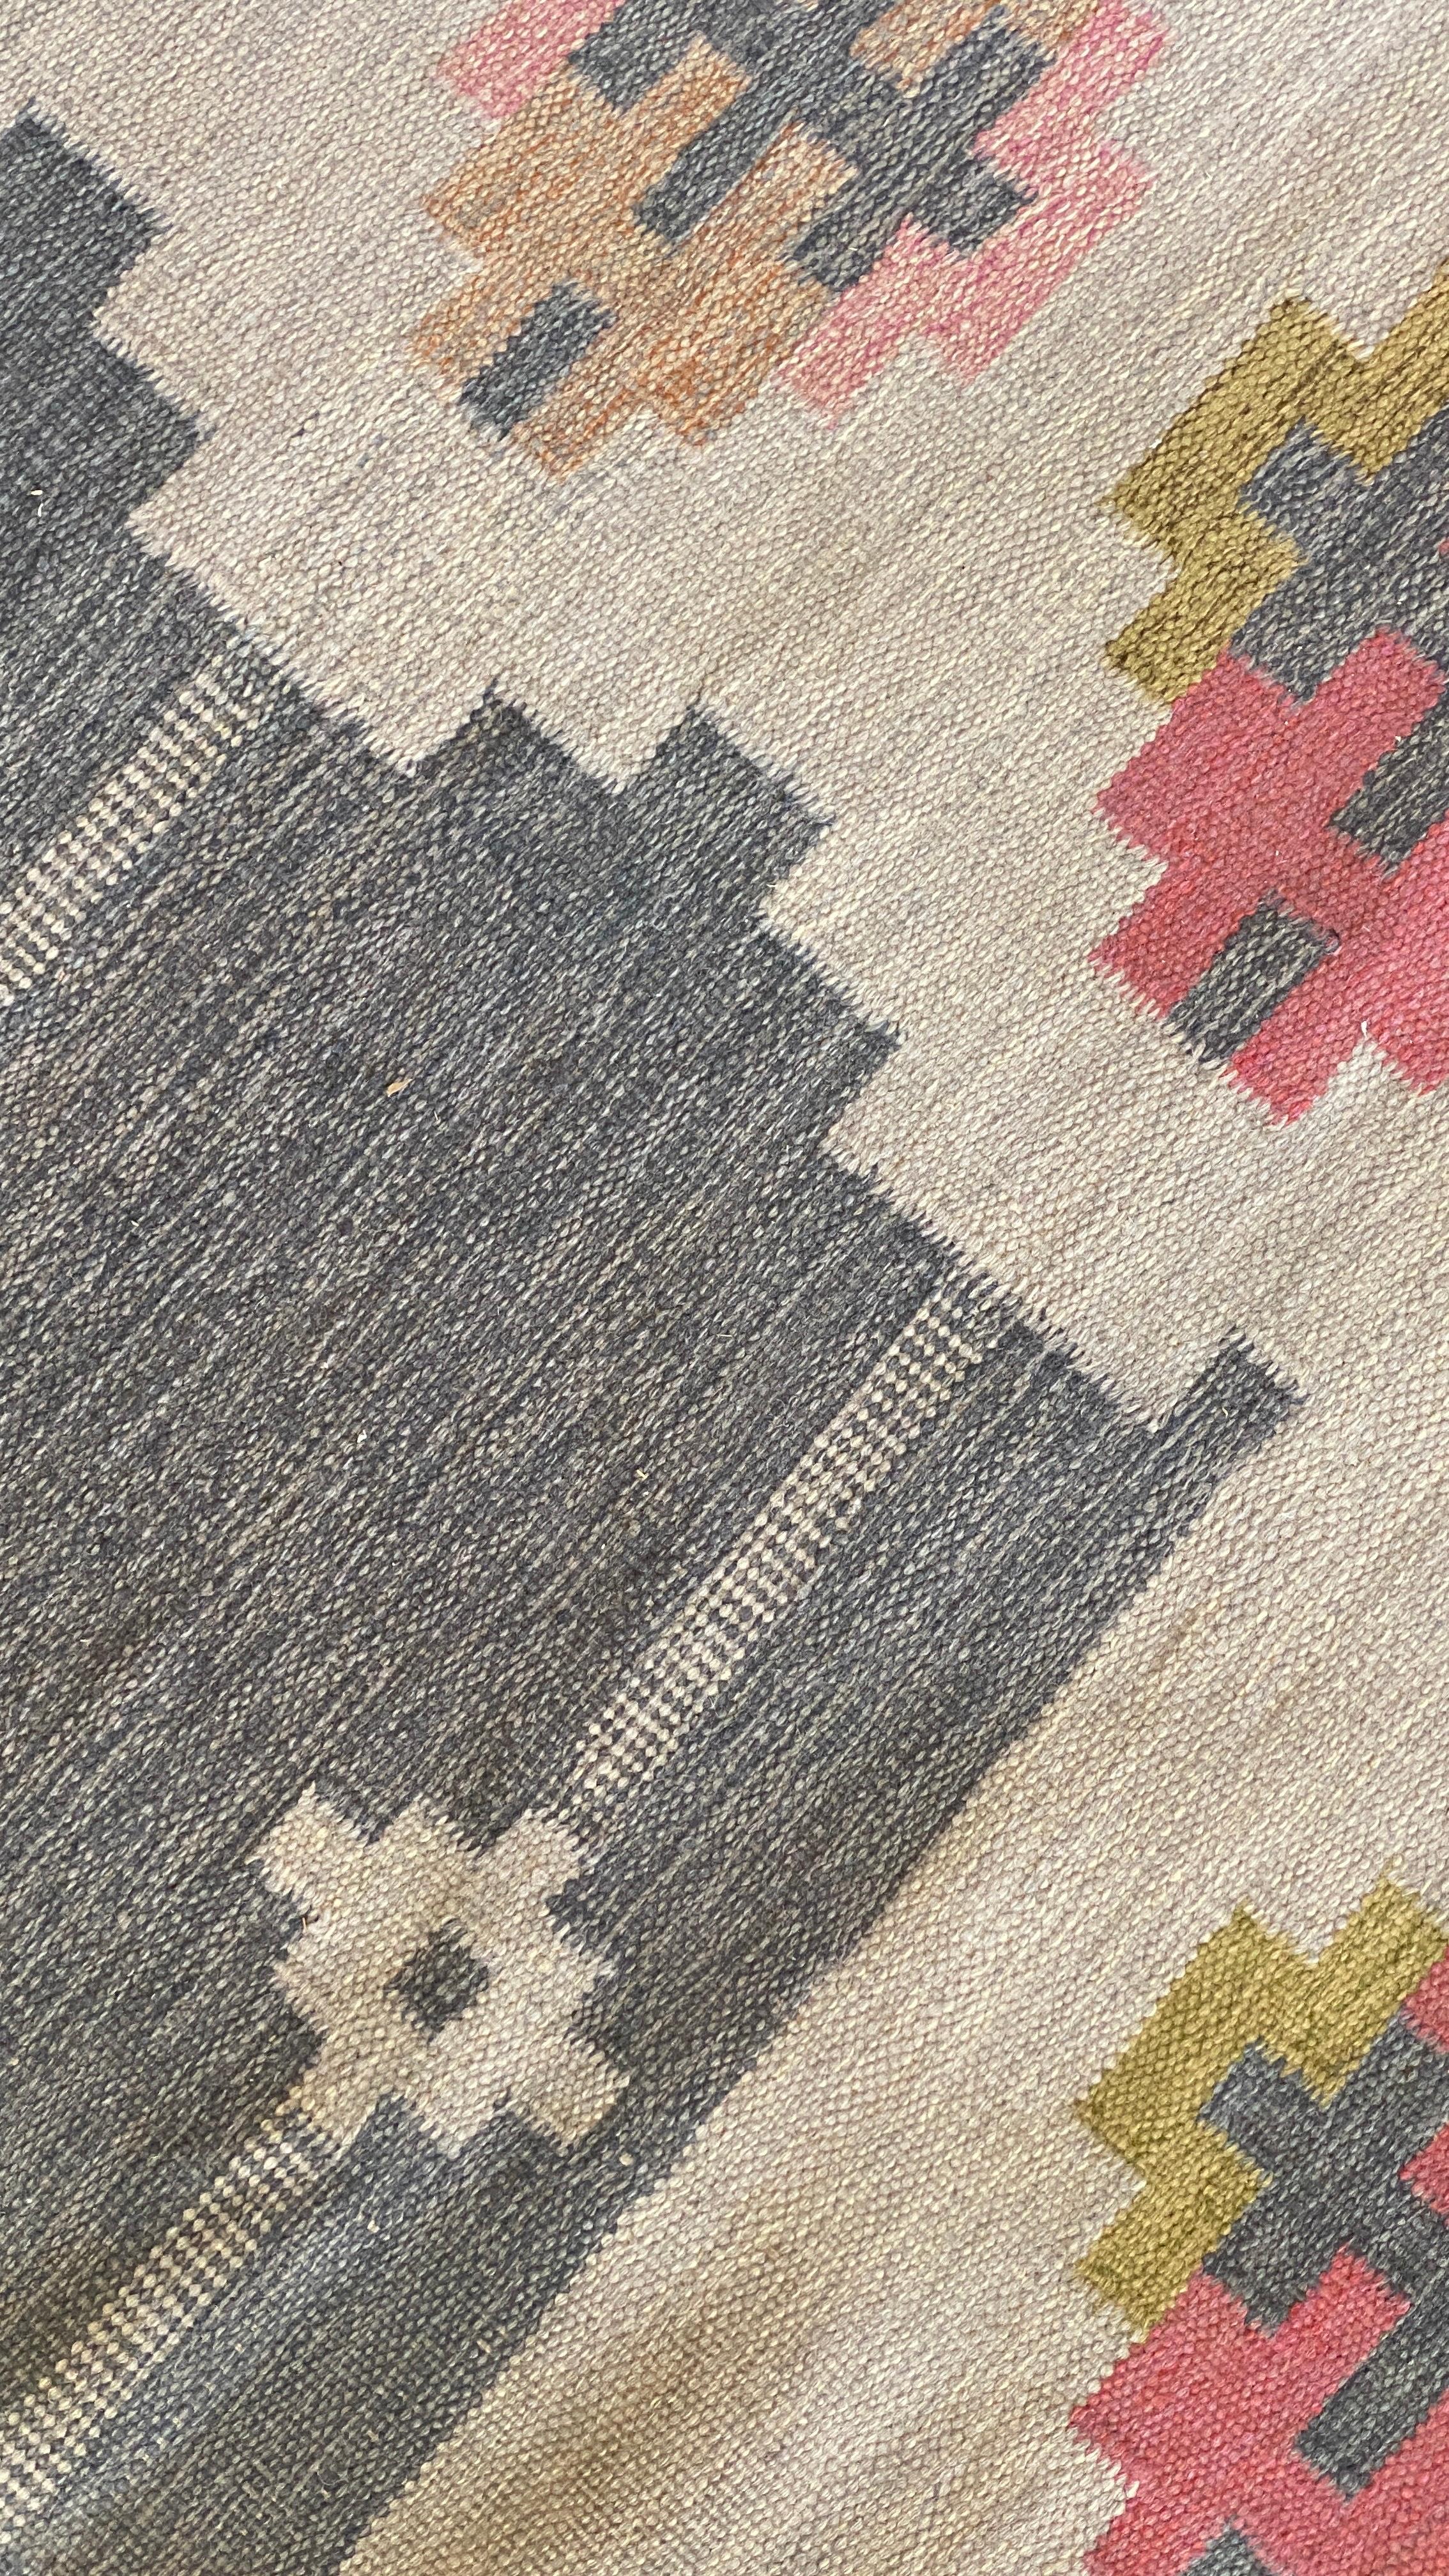 Scandinavian Modern Karin Jönsson, Signed Flat-Weave Carpet, Dyed Wool, Sweden, 1950s For Sale